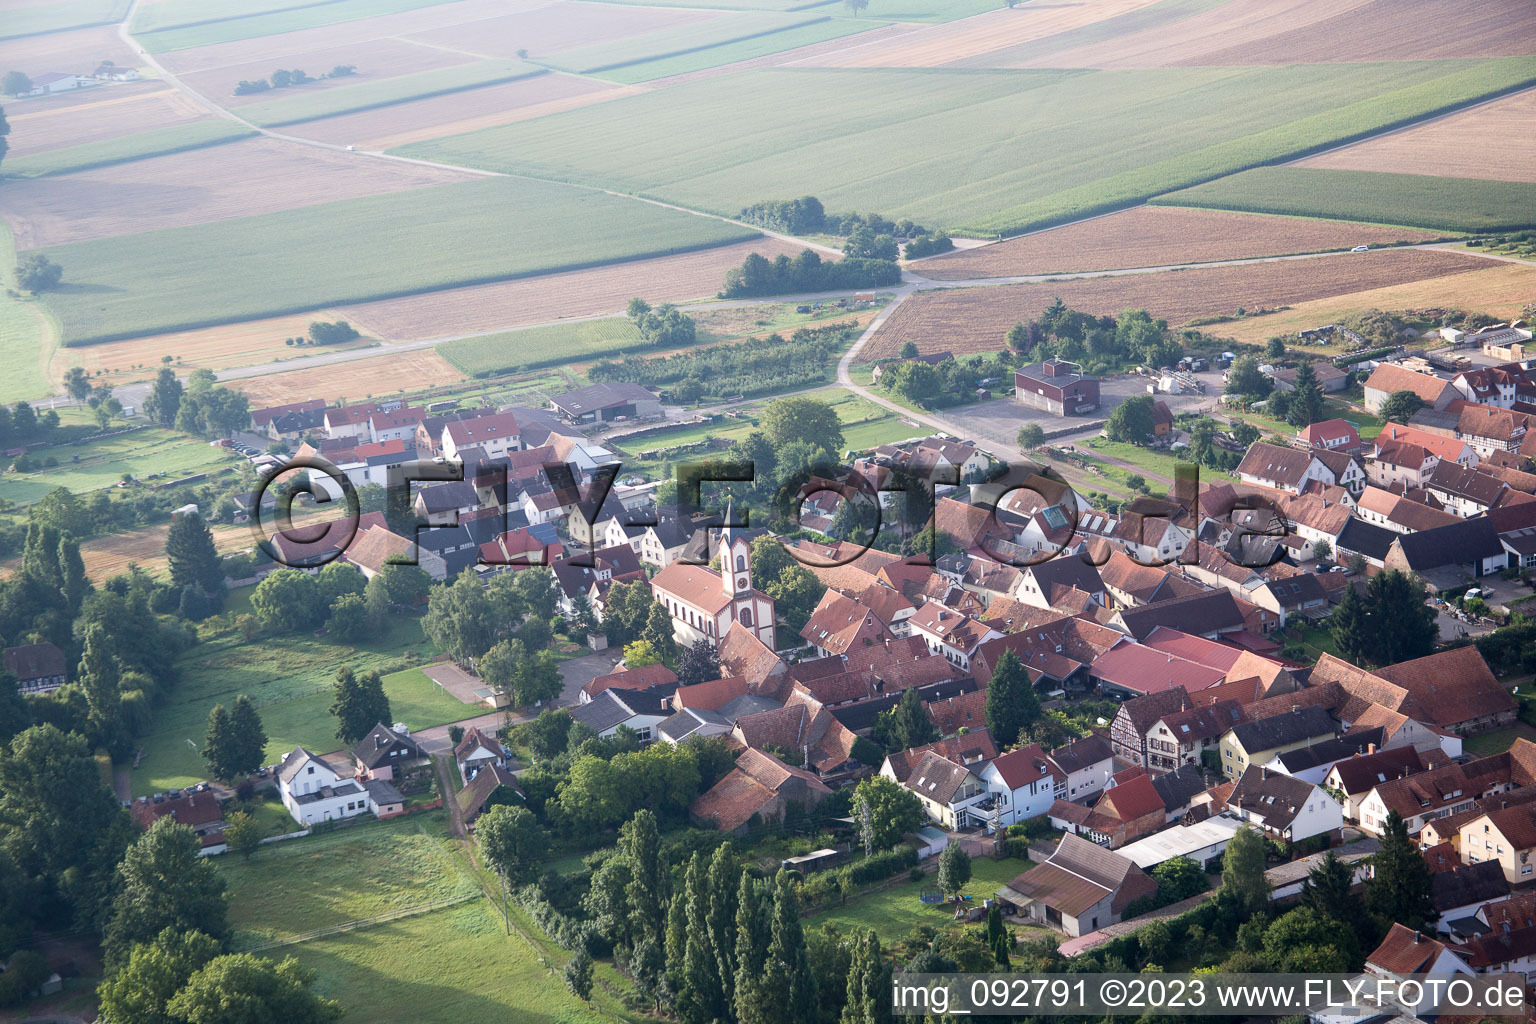 Drone recording of District Mühlhofen in Billigheim-Ingenheim in the state Rhineland-Palatinate, Germany